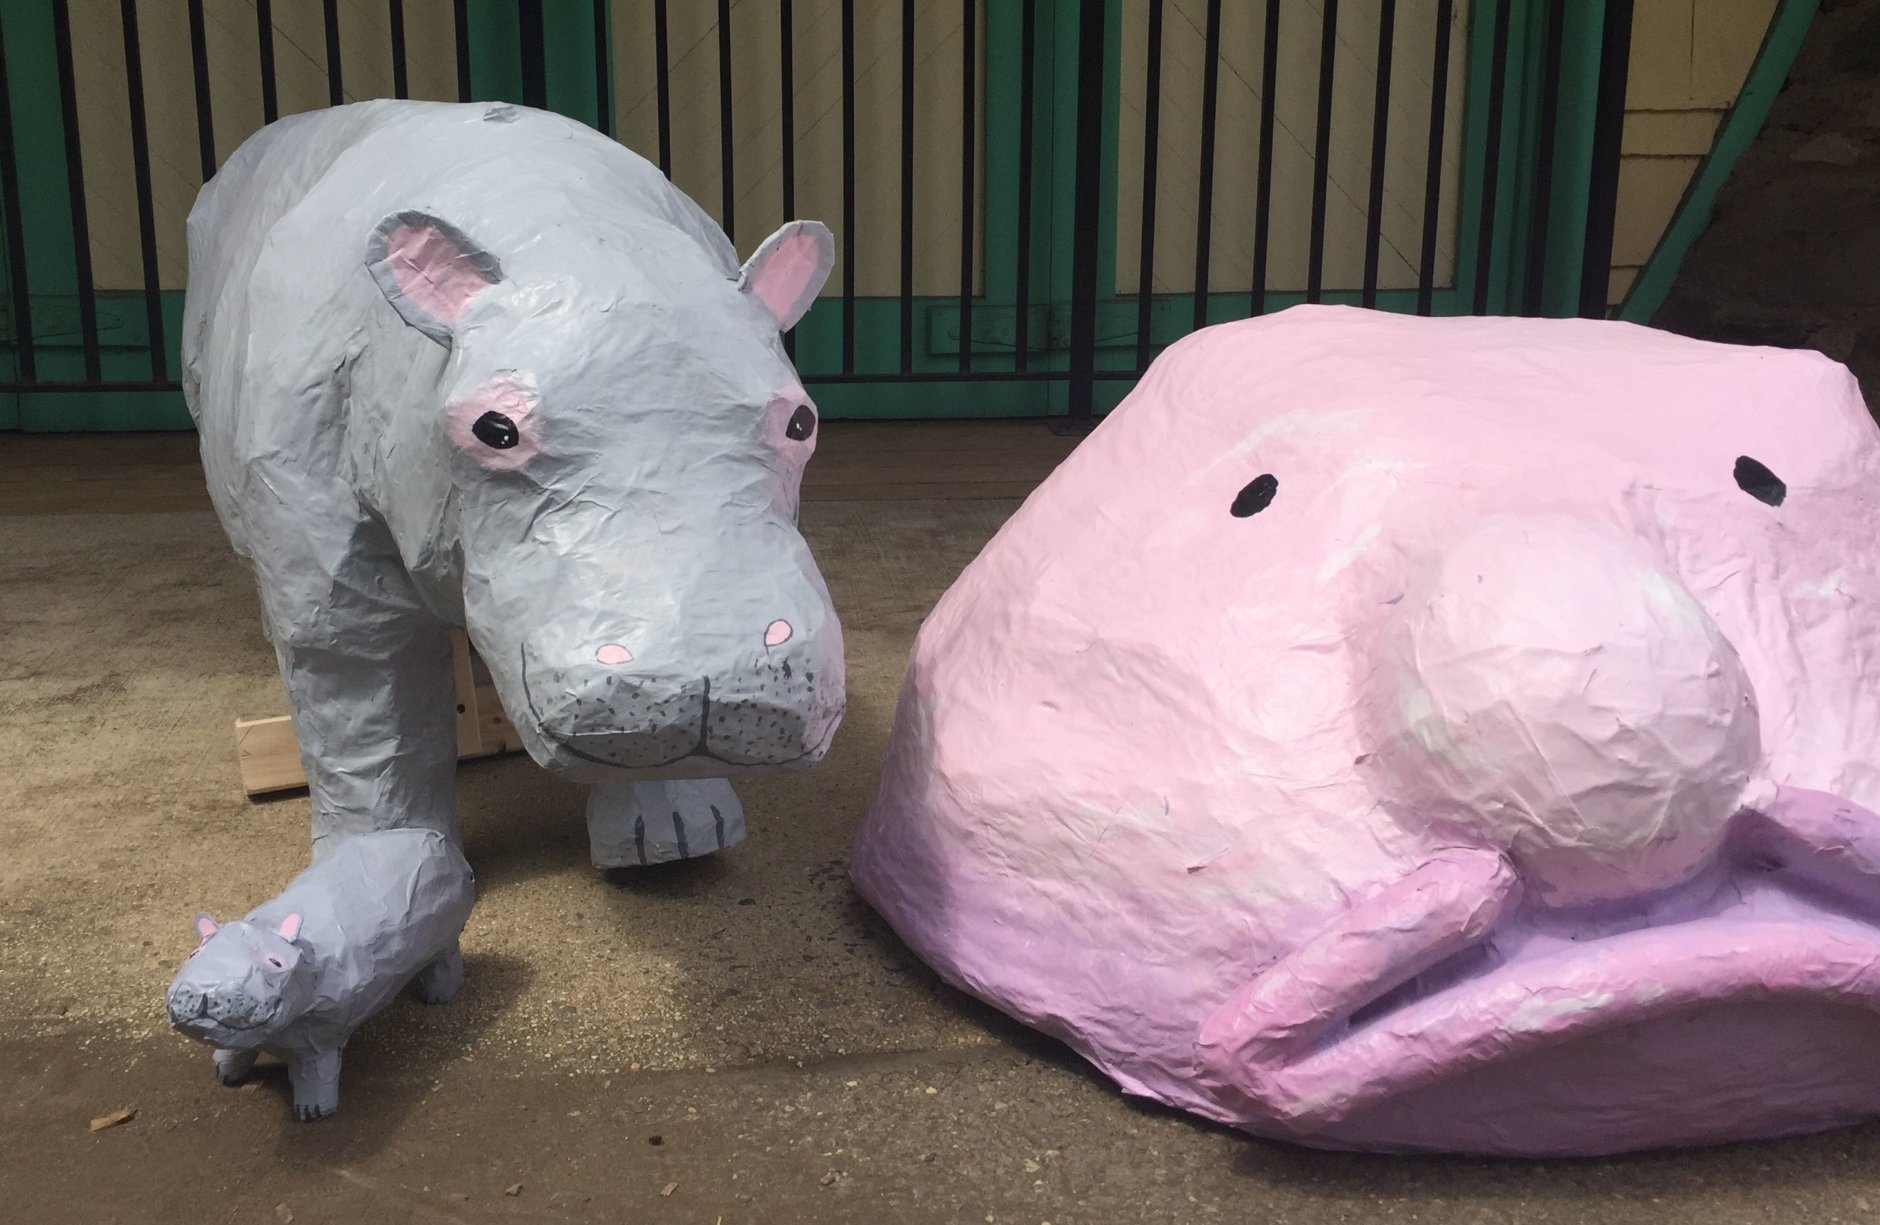 Kids get to make fun art attending Glen Echo Park's Carousel Animals Camp For Teens. (WTOP/Kristi King)